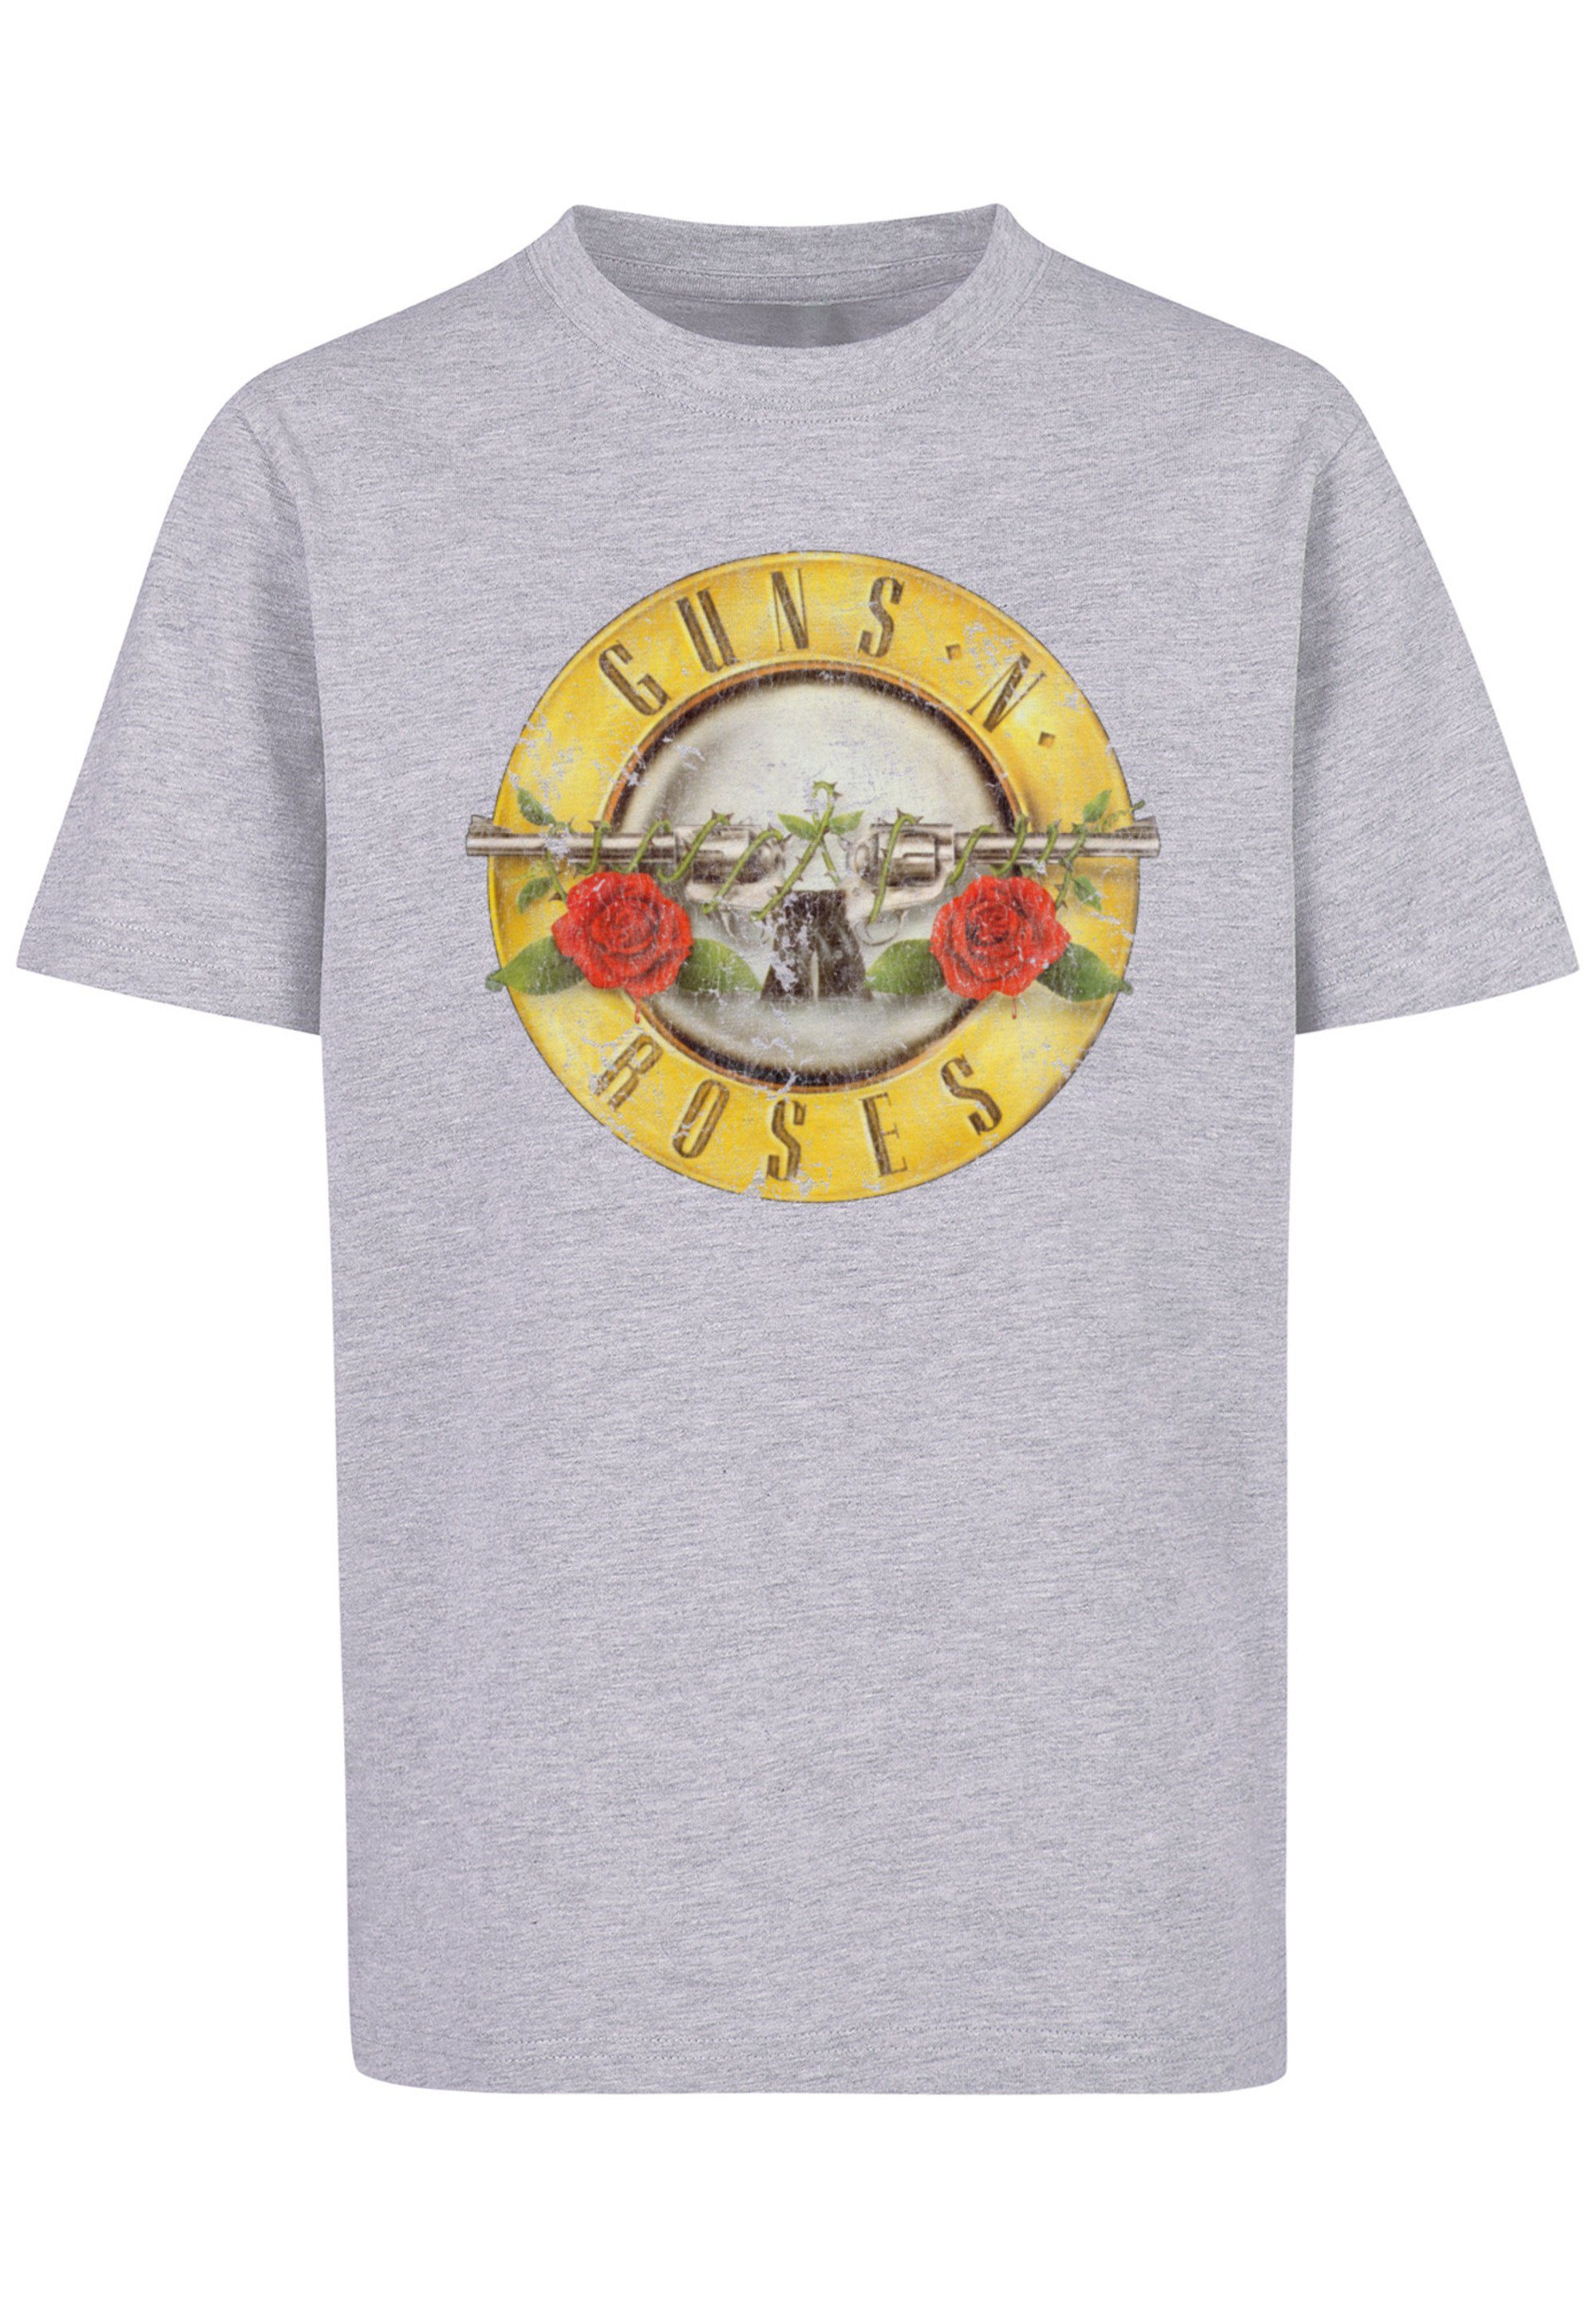 Print Classic Black grey Guns Logo Vintage Band (Distressed) T-Shirt heather 'n' F4NT4STIC Roses